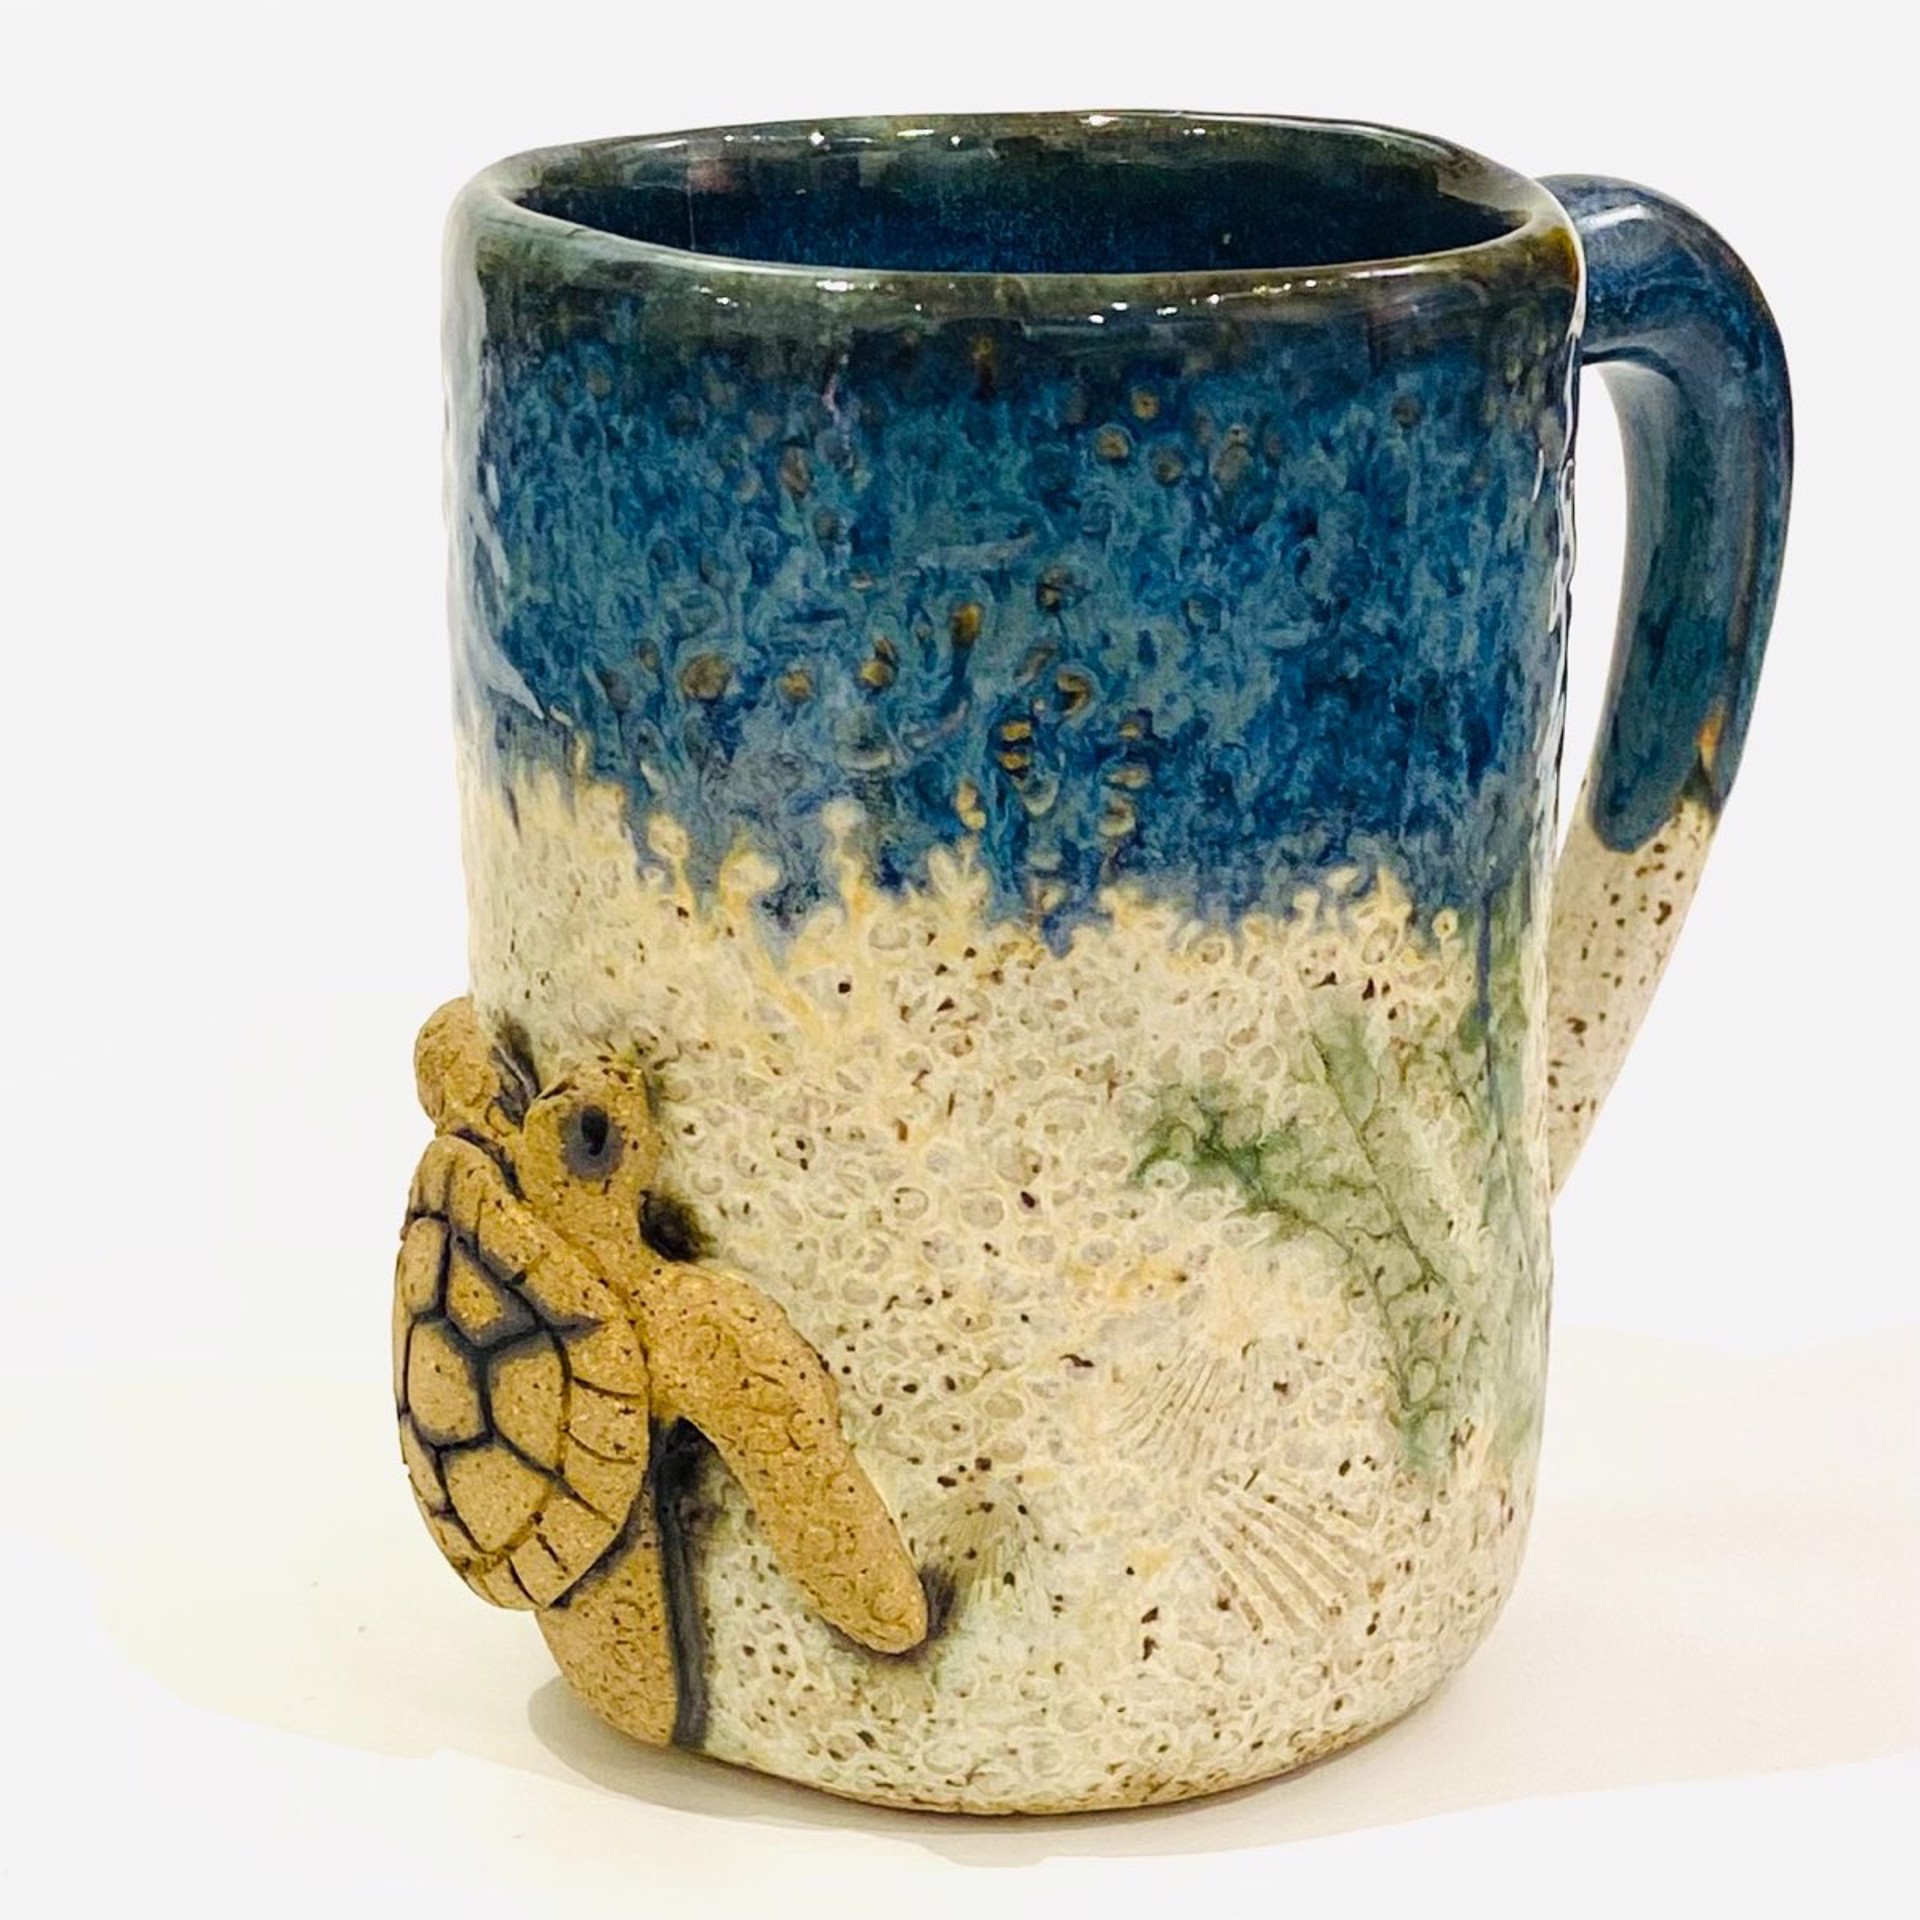 LG22-939 Mug with turtle (Blue Glaze) by Jim & Steffi Logan